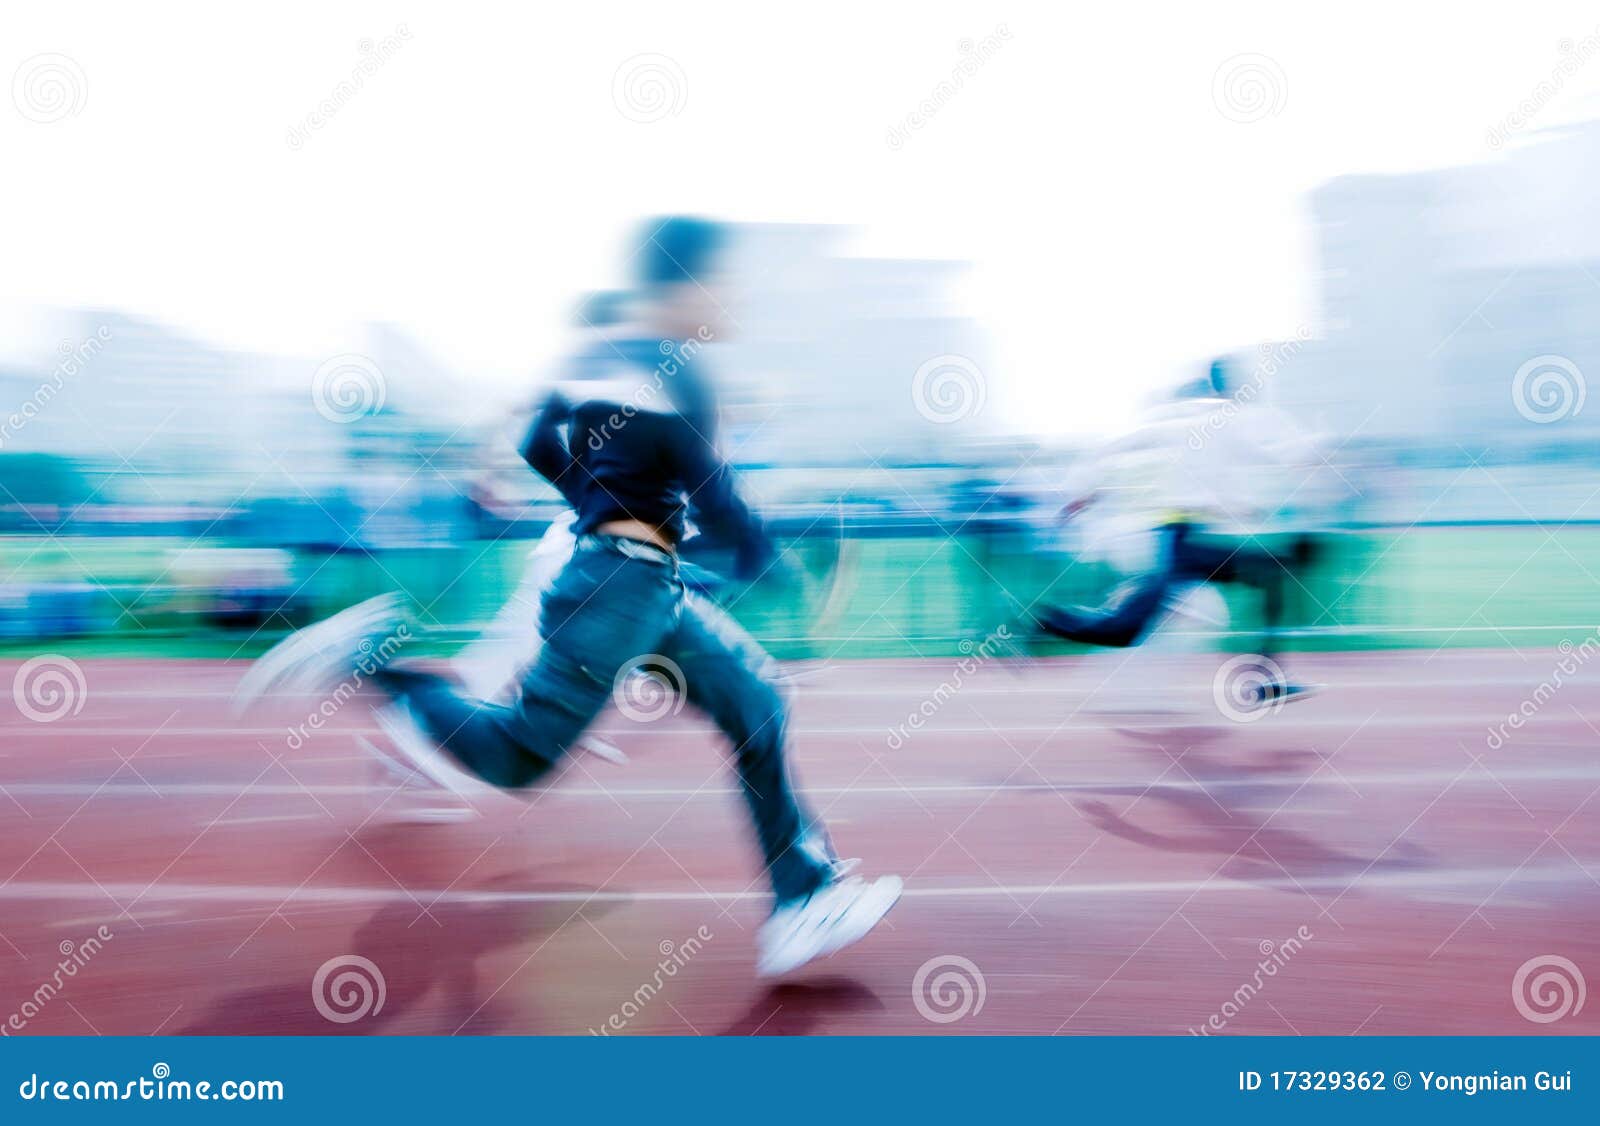 100m running race